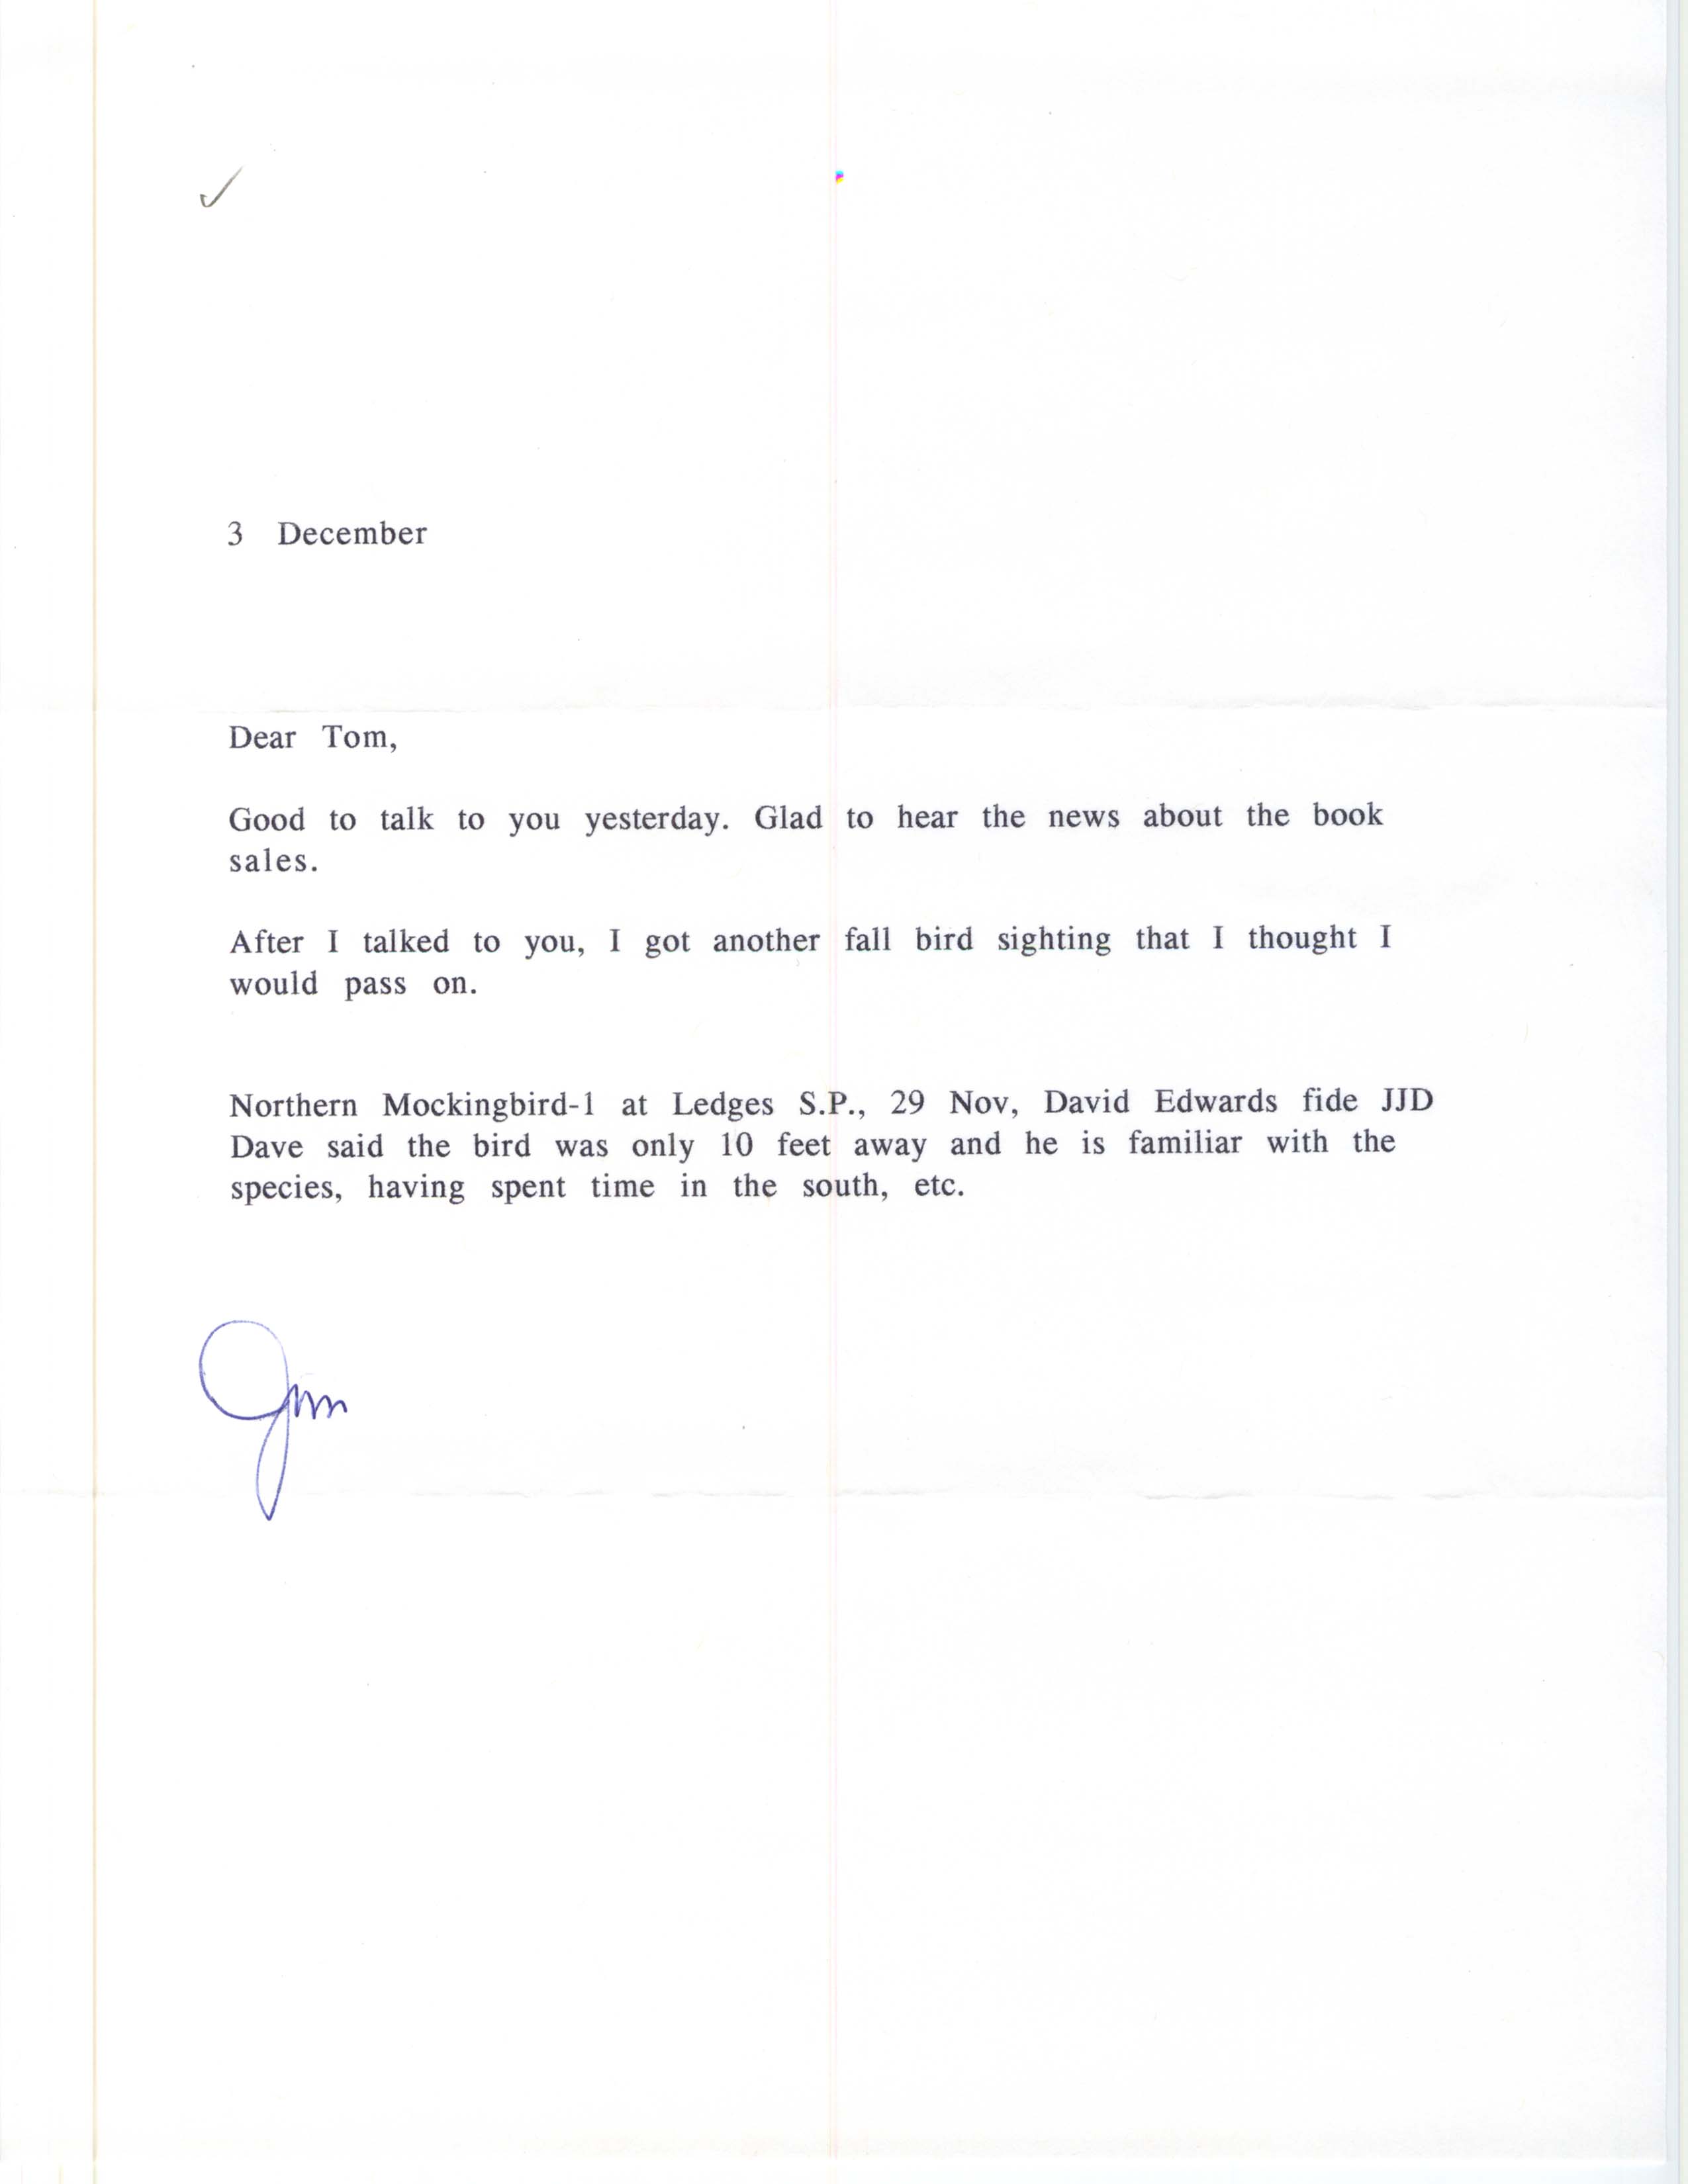 James J. Dinsmore letter to Thomas H. Kent regarding a Northern Mockingbird sighting, December 3, 1997